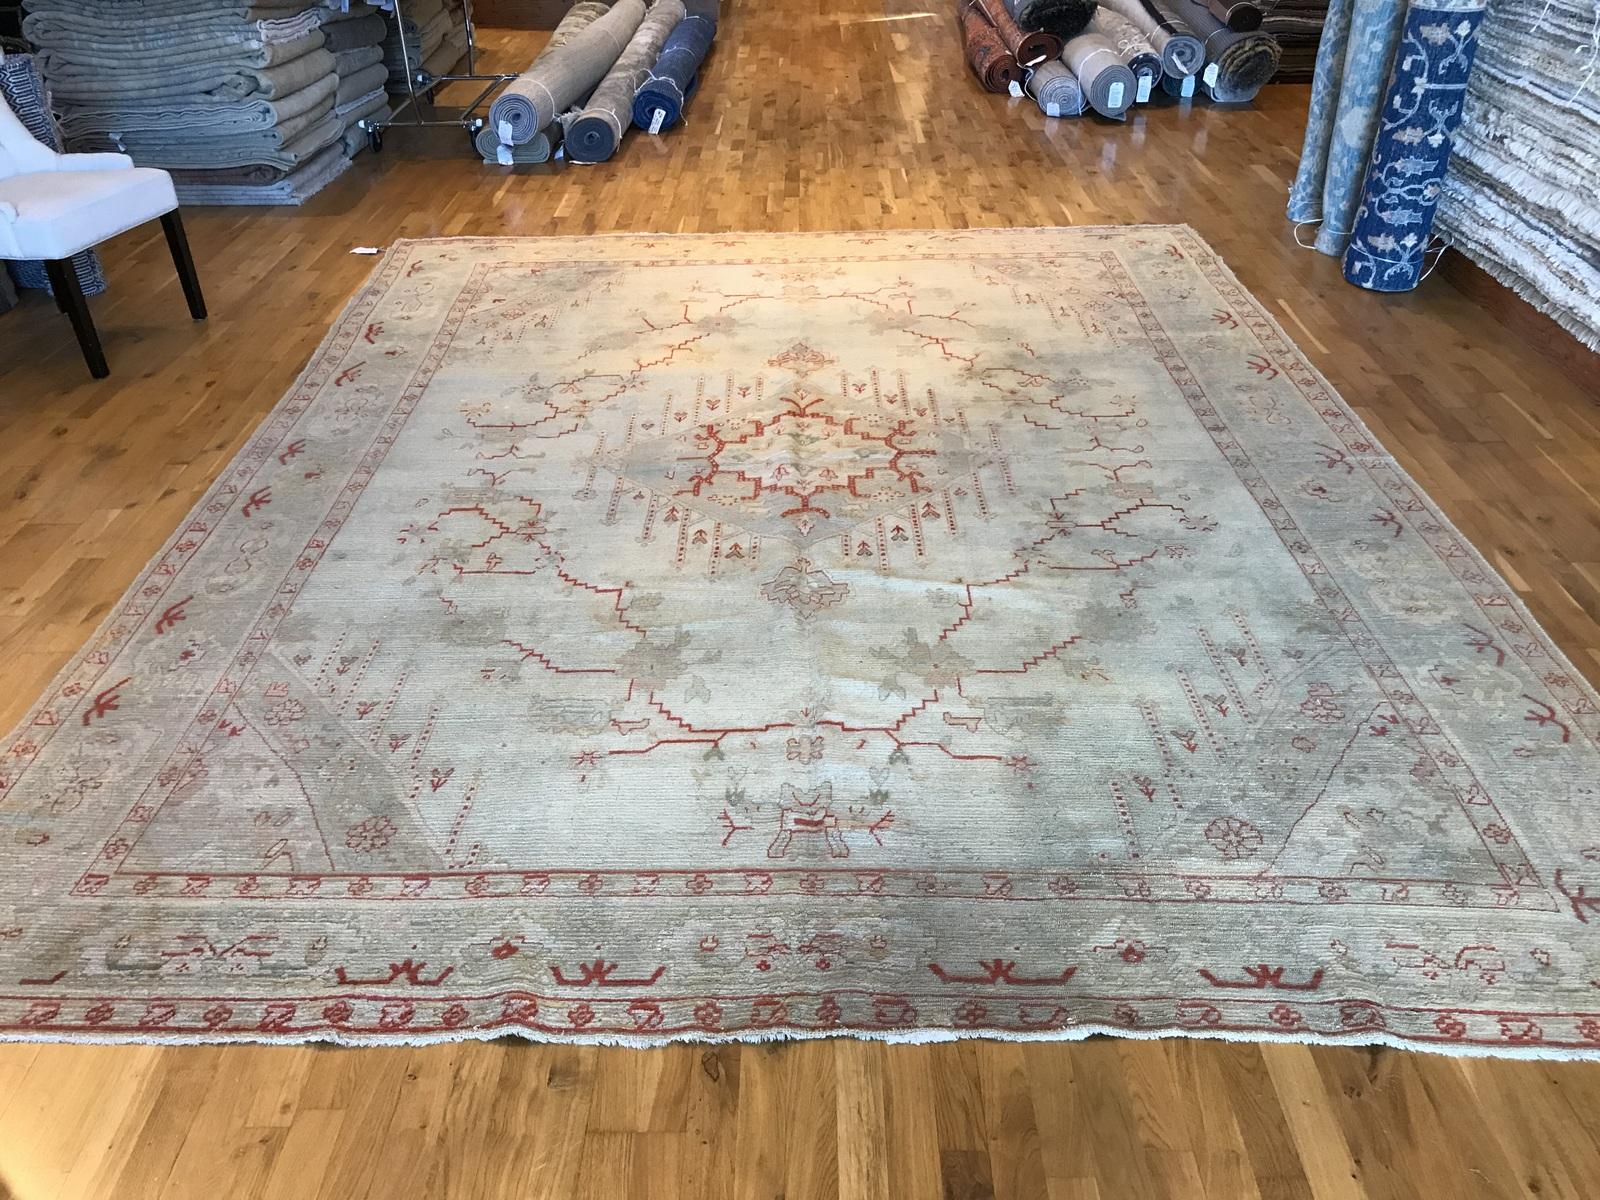 Antique Oushak rug

Measurement: 9'9